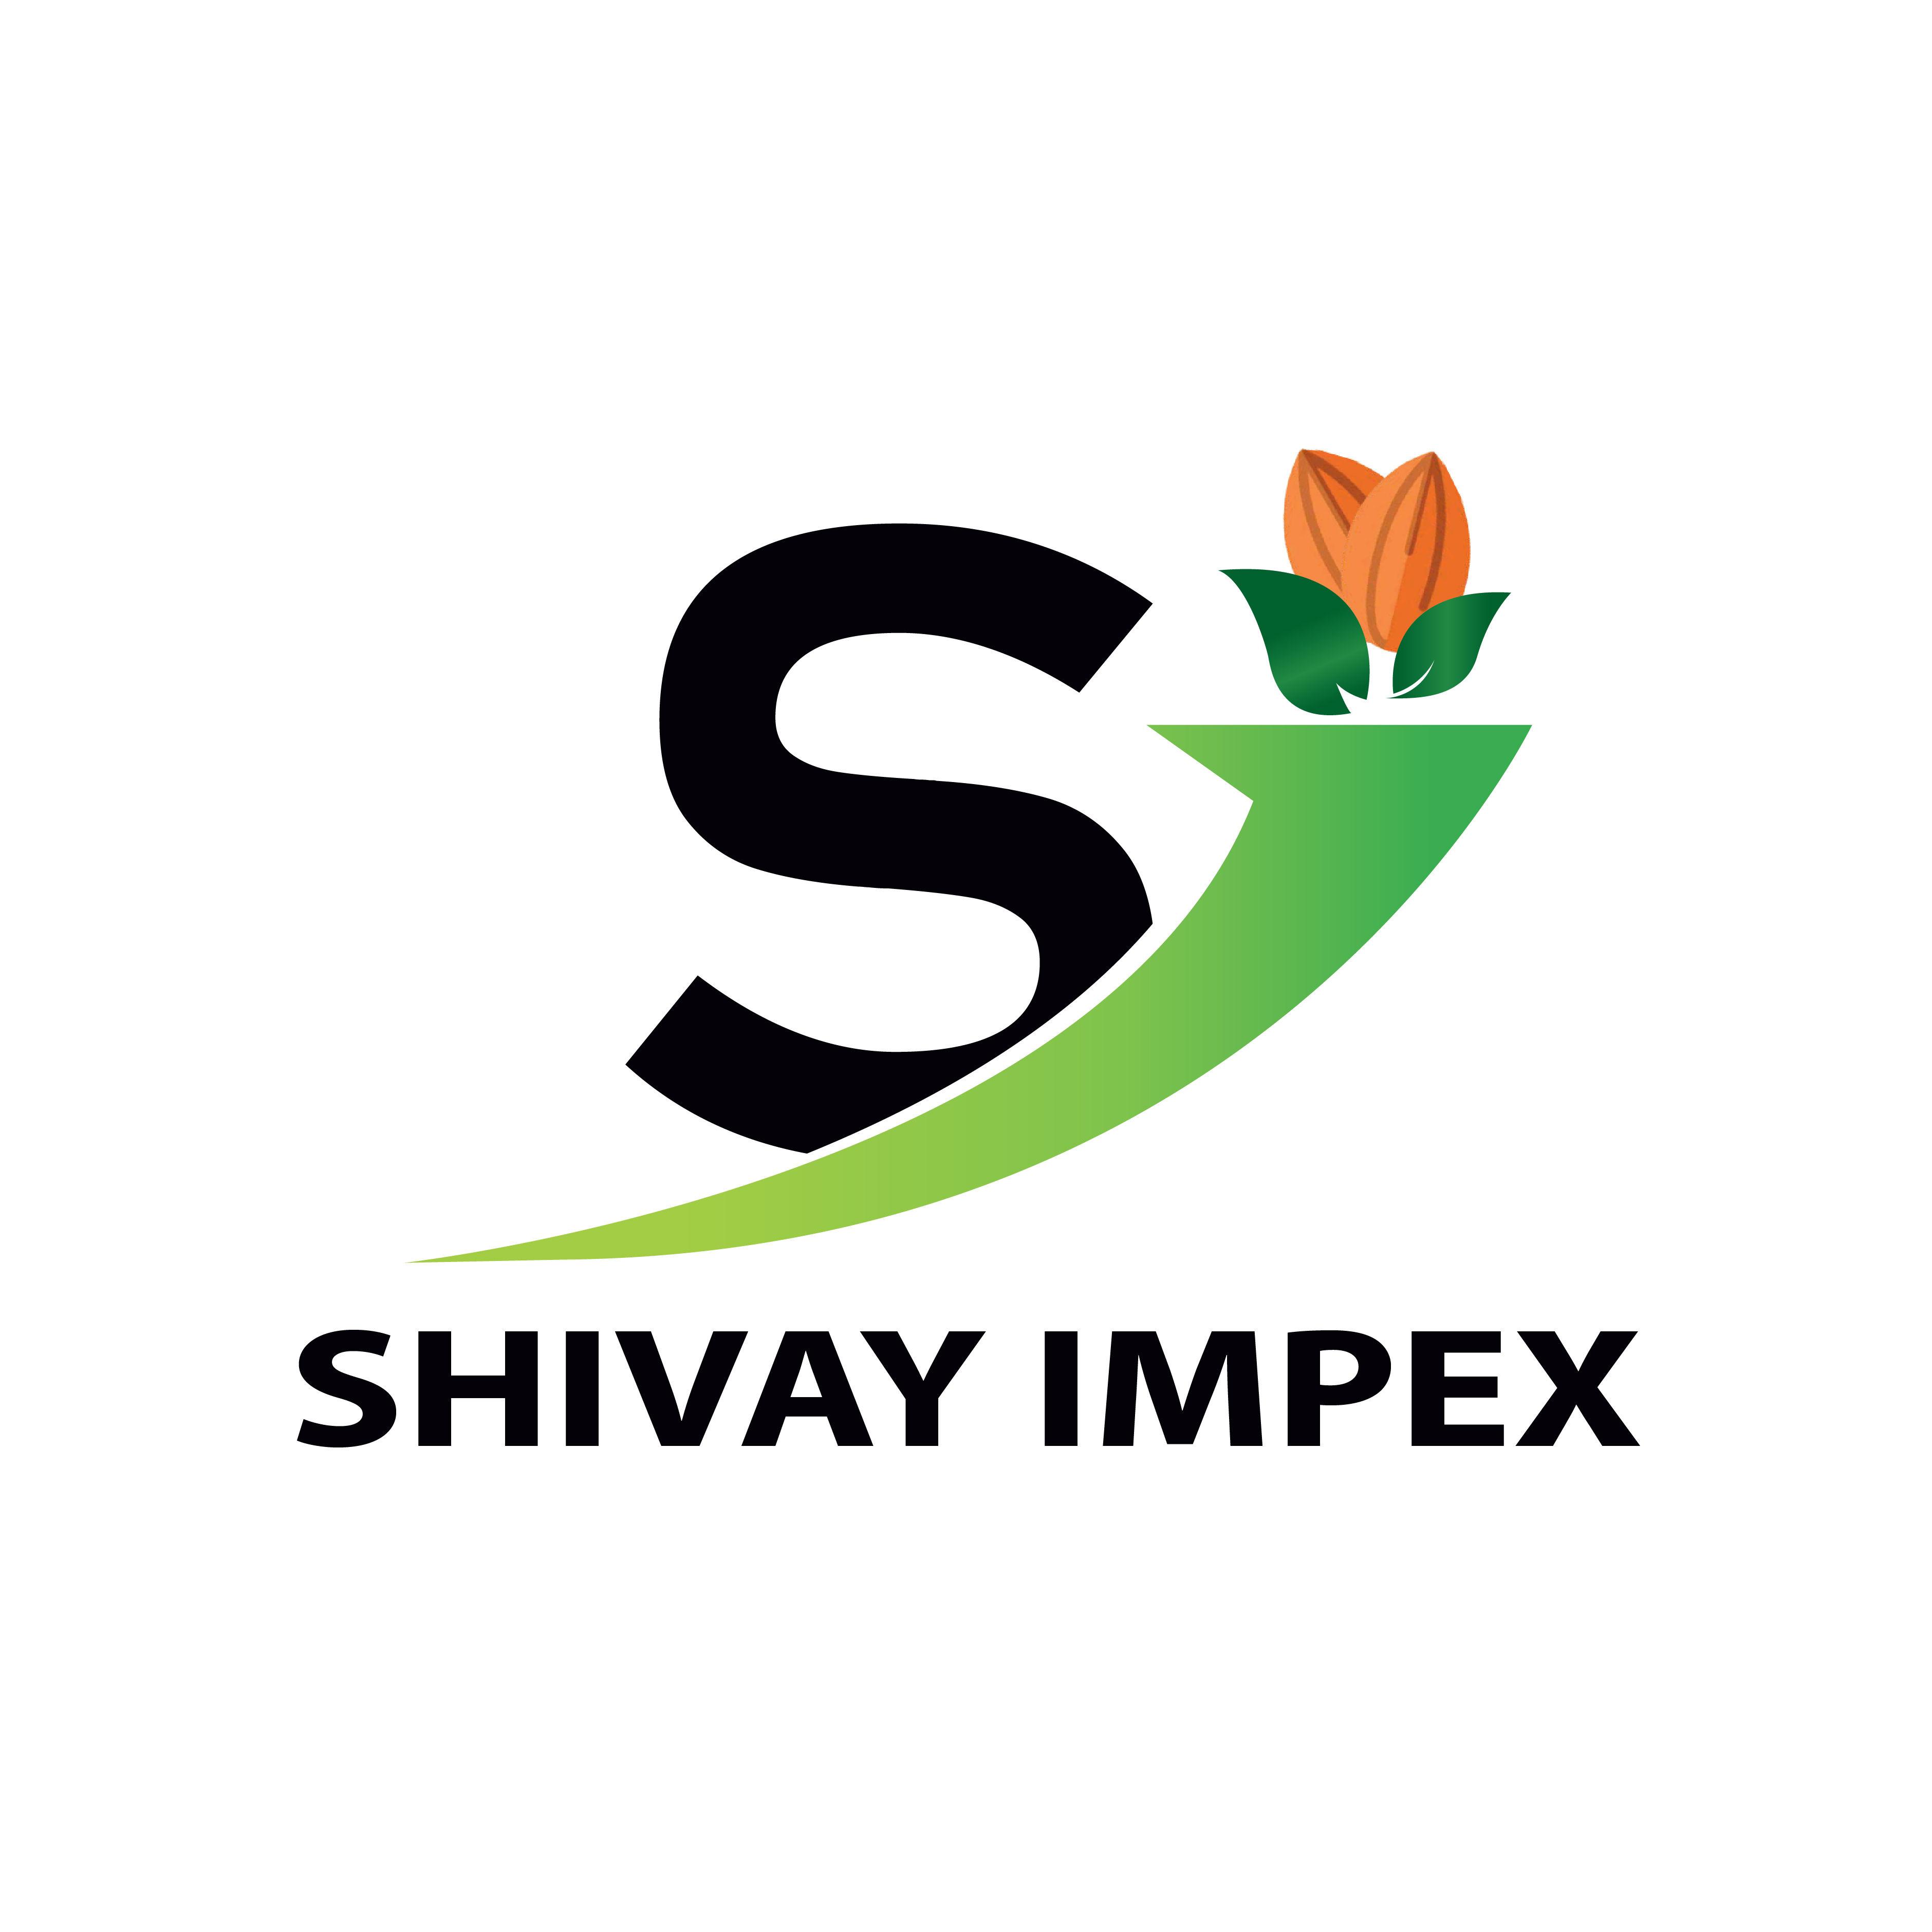 SHIVAY IMPEX